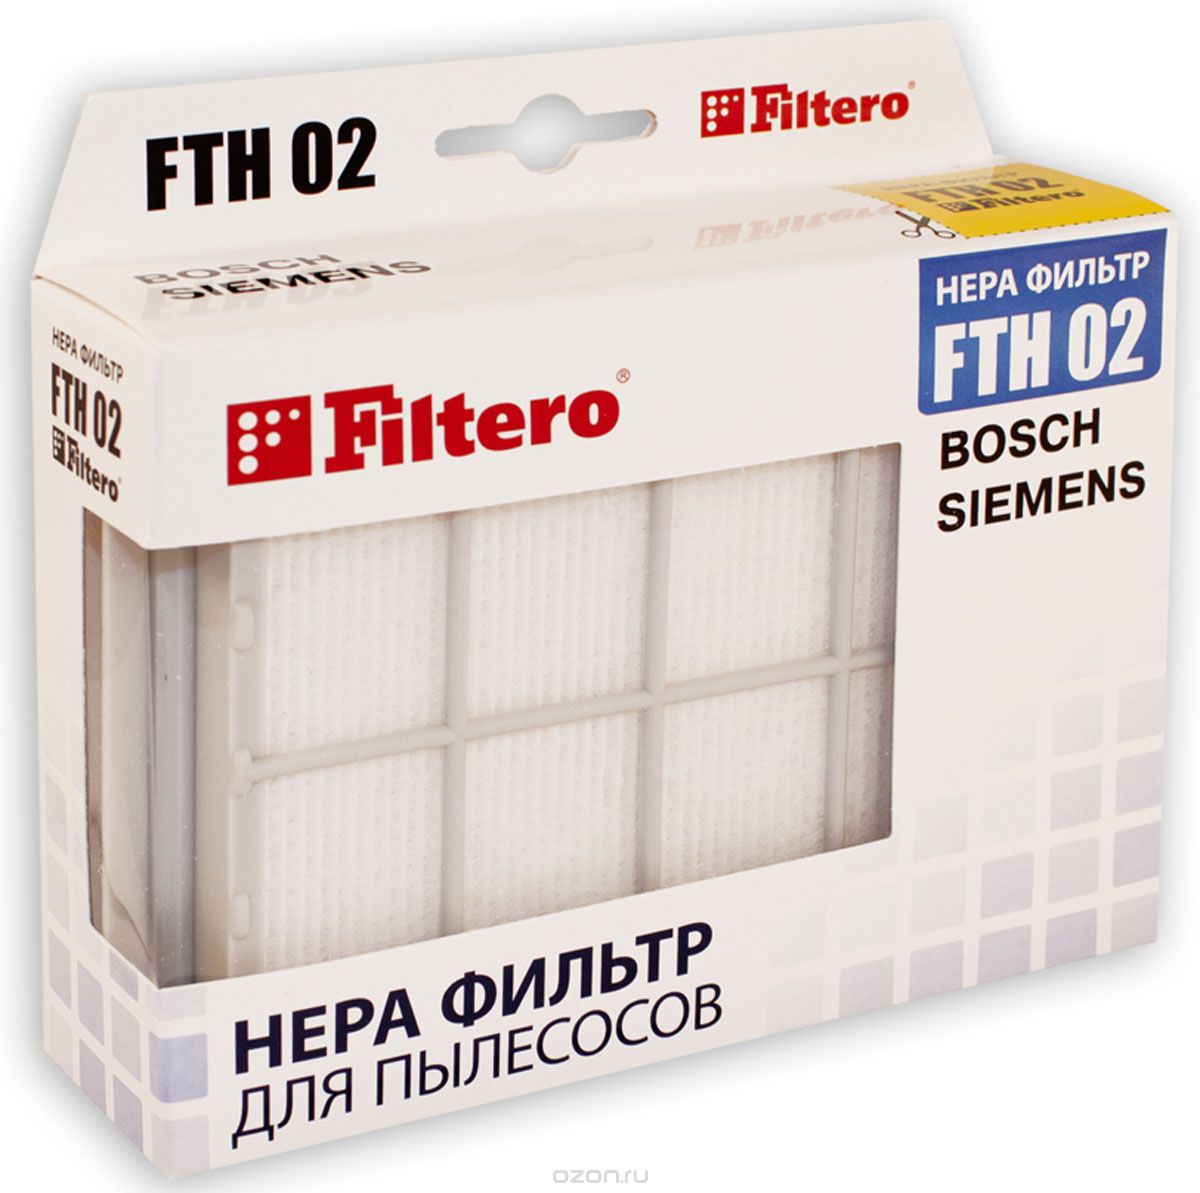 Filtero FTH 02 BSH HEPA-   Bosch, Siemens